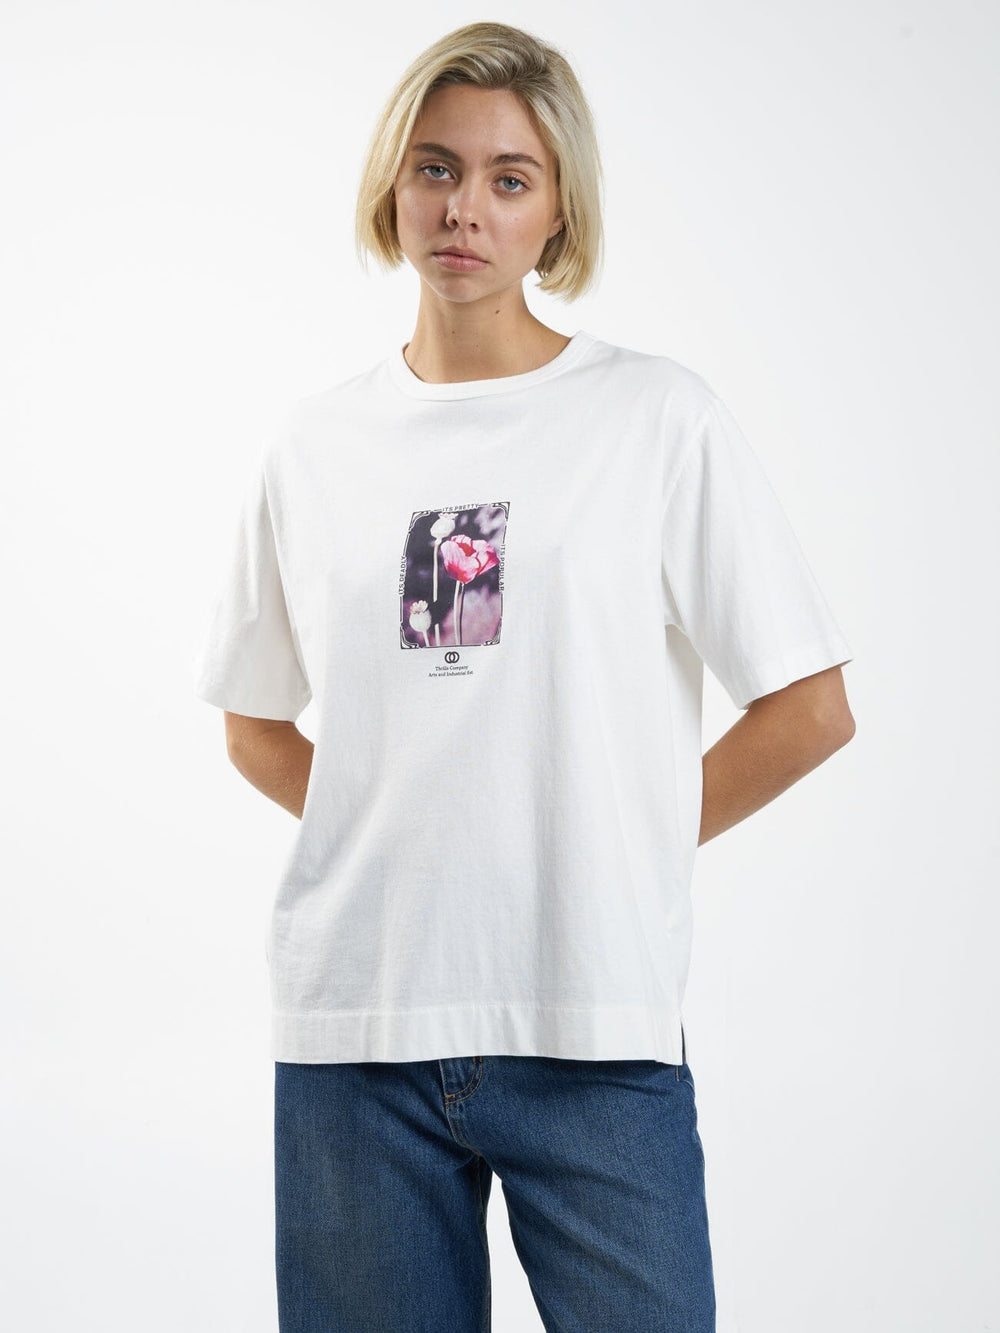 Women's Graphic Tees / T-Shirts Australia